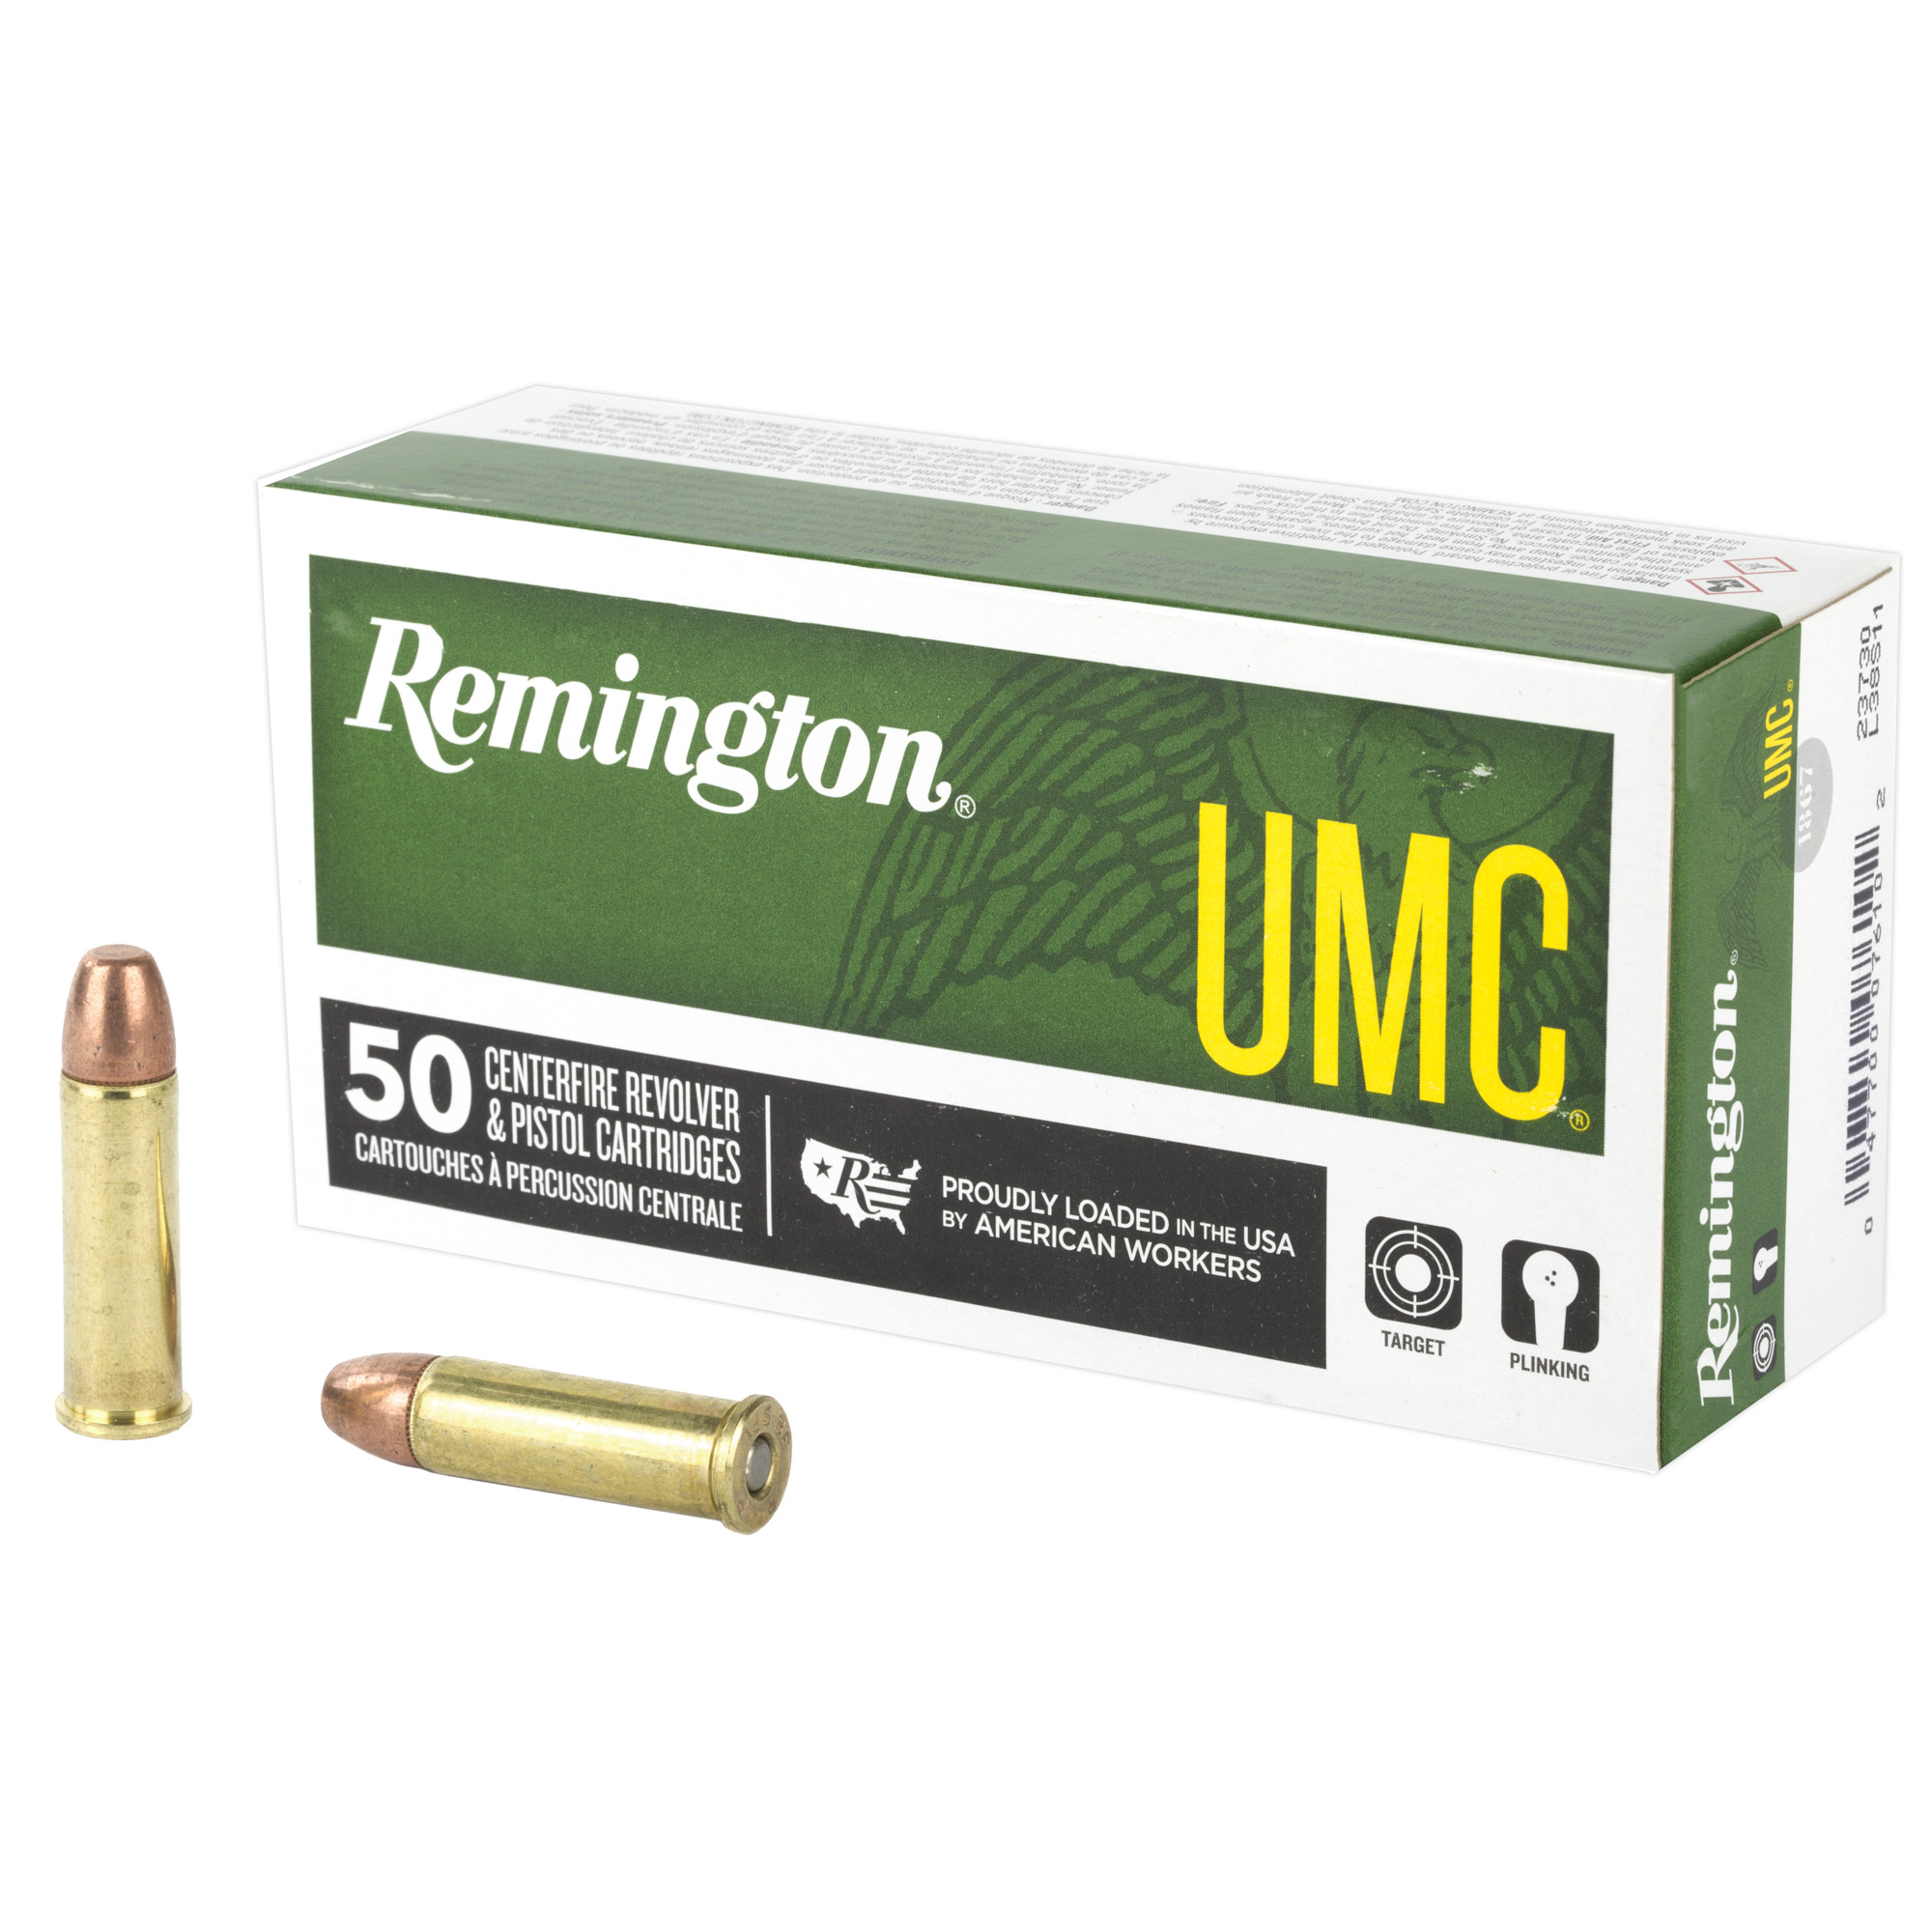 Remington, UMC, 38 Special, 130 Grain, Full Metal Jacket, 50 Round Box